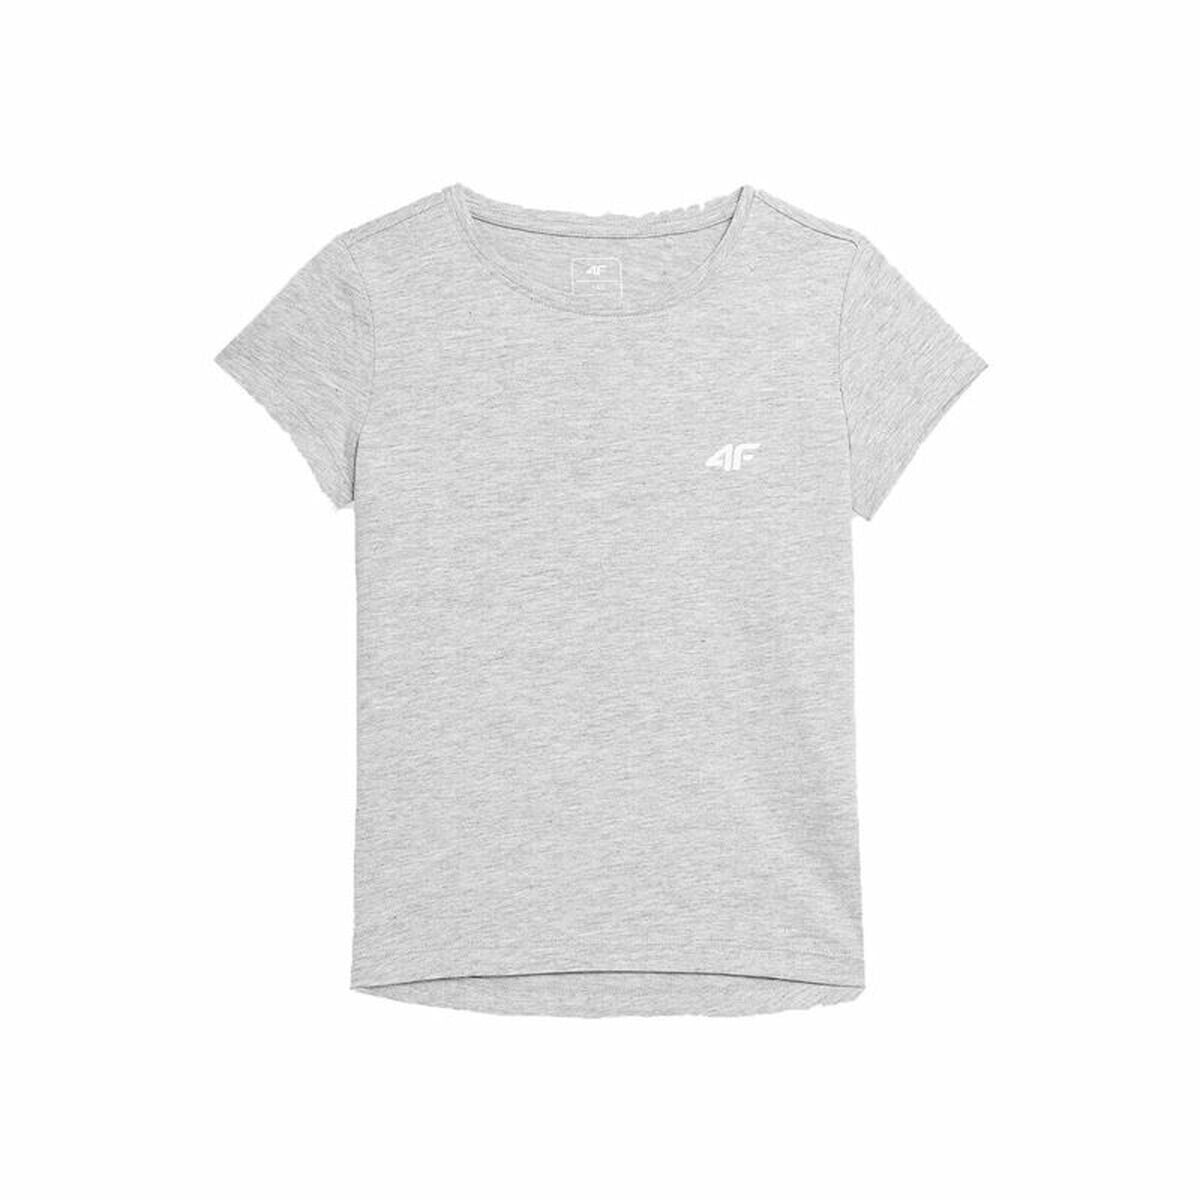 Child's Short Sleeve T-Shirt 4F JTSD001 Grey